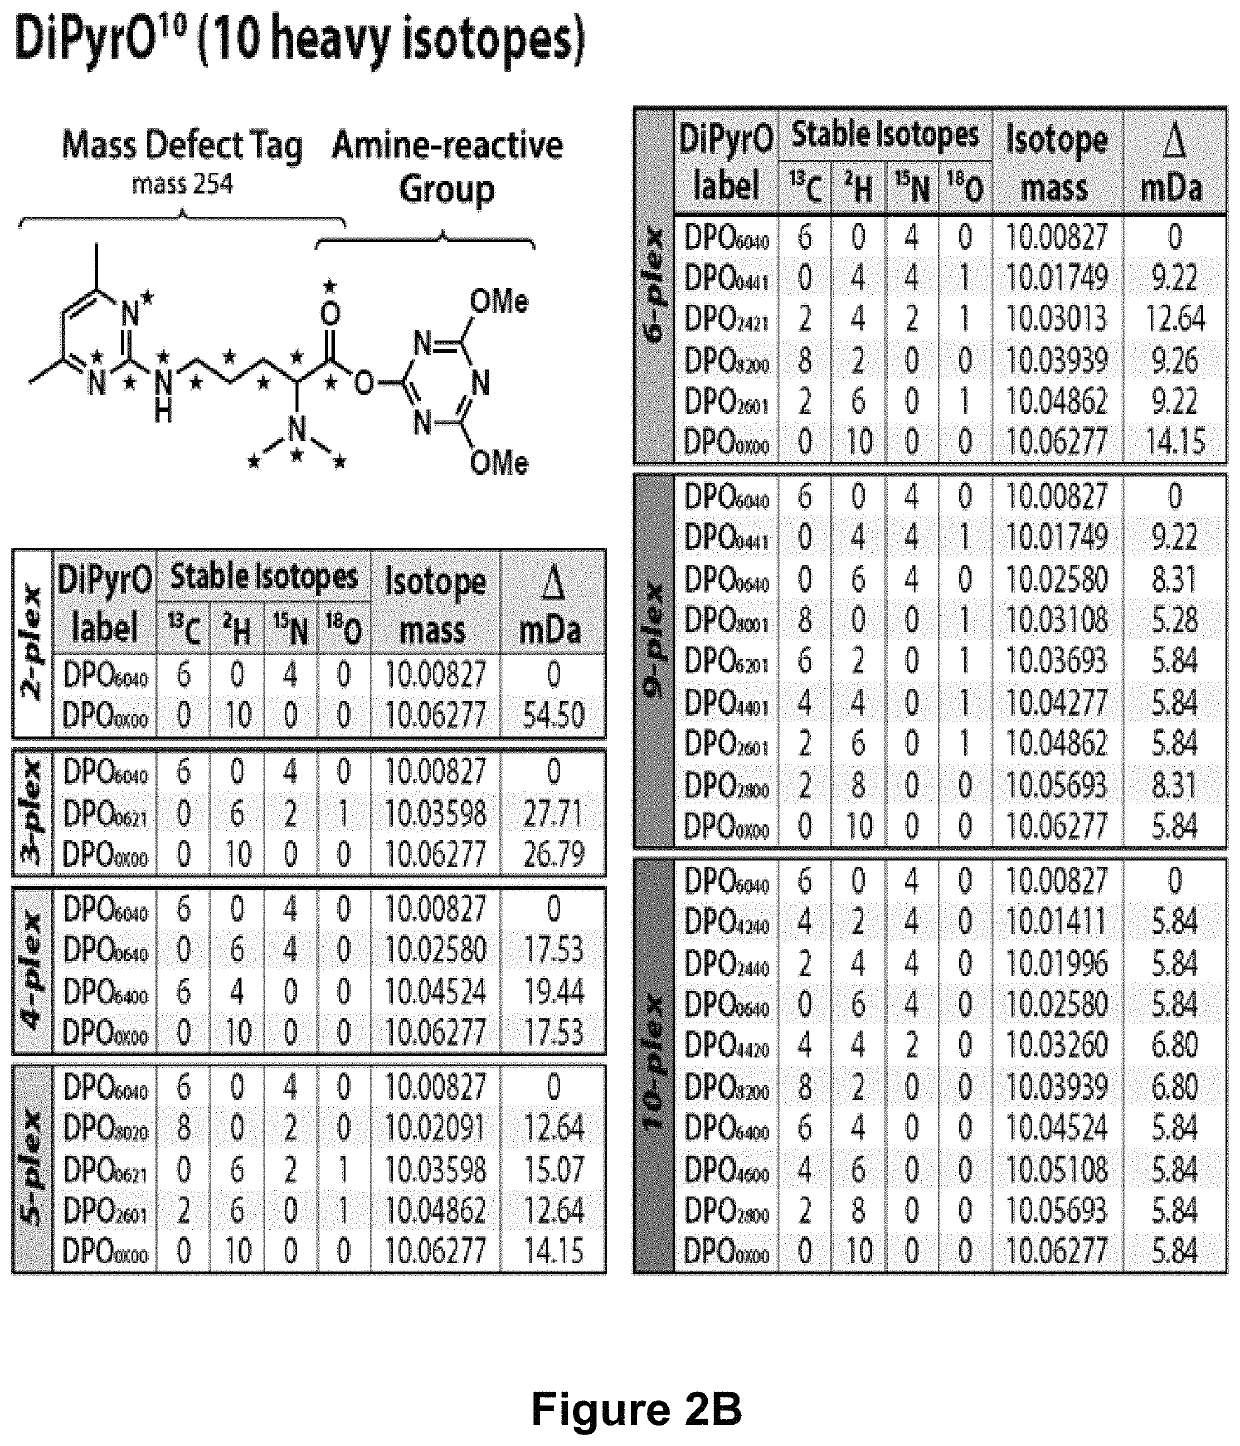 Mass defect-based multiplex dimethyl pyrimidinyl ornithine (DiPyrO) tags for high-throughput quantitative proteomics and peptidomics